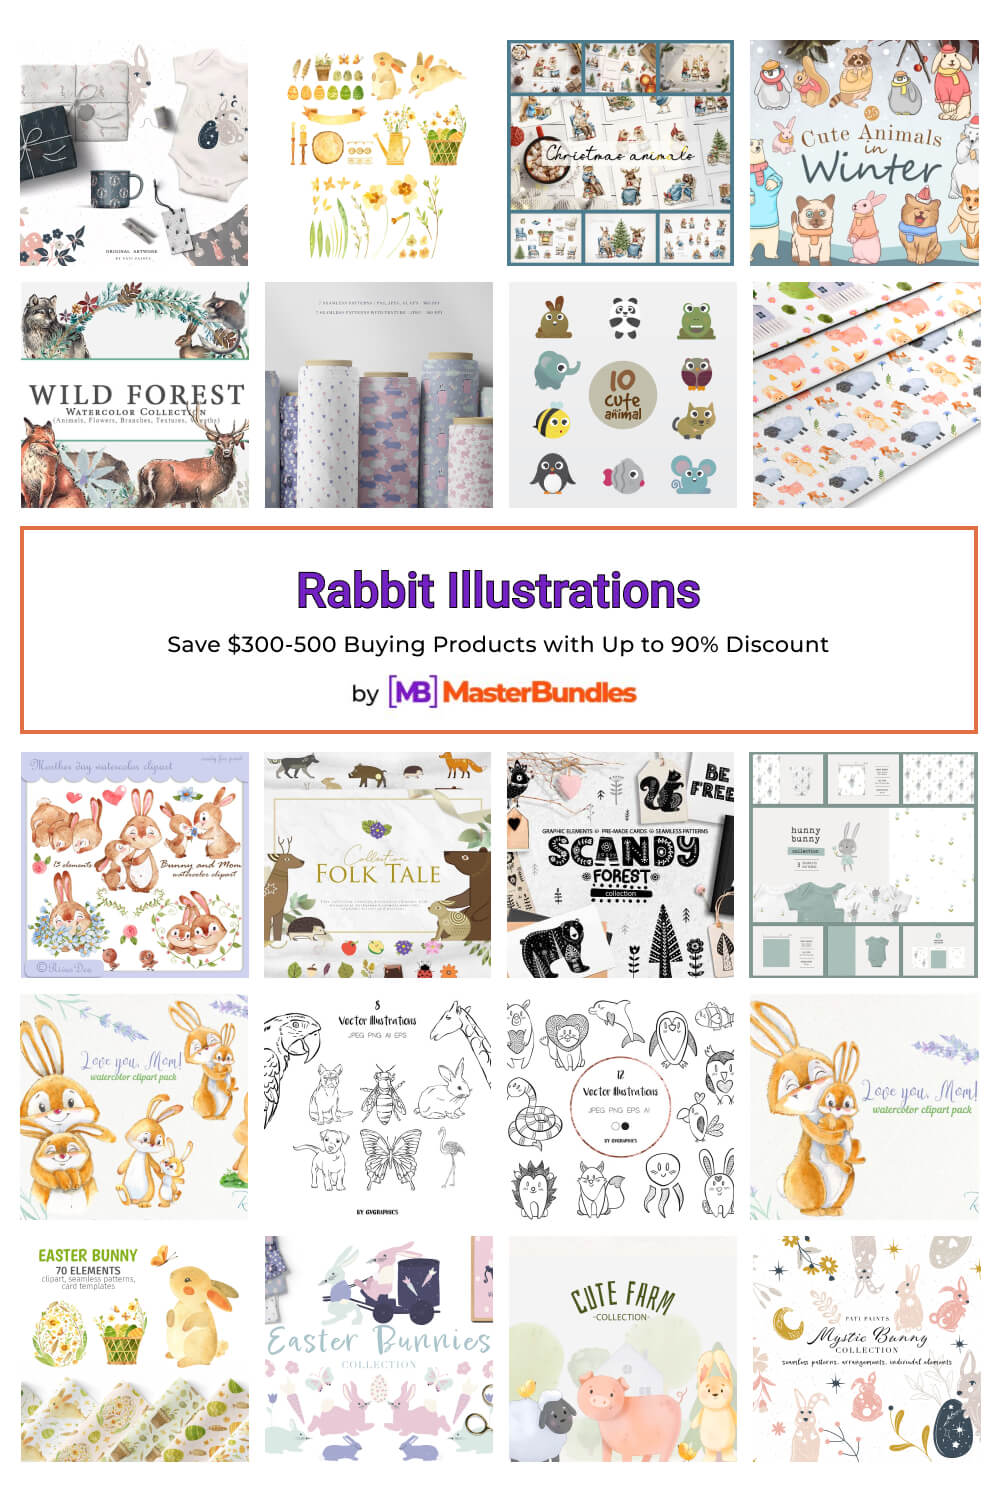 rabbit illustrations pinterest image.